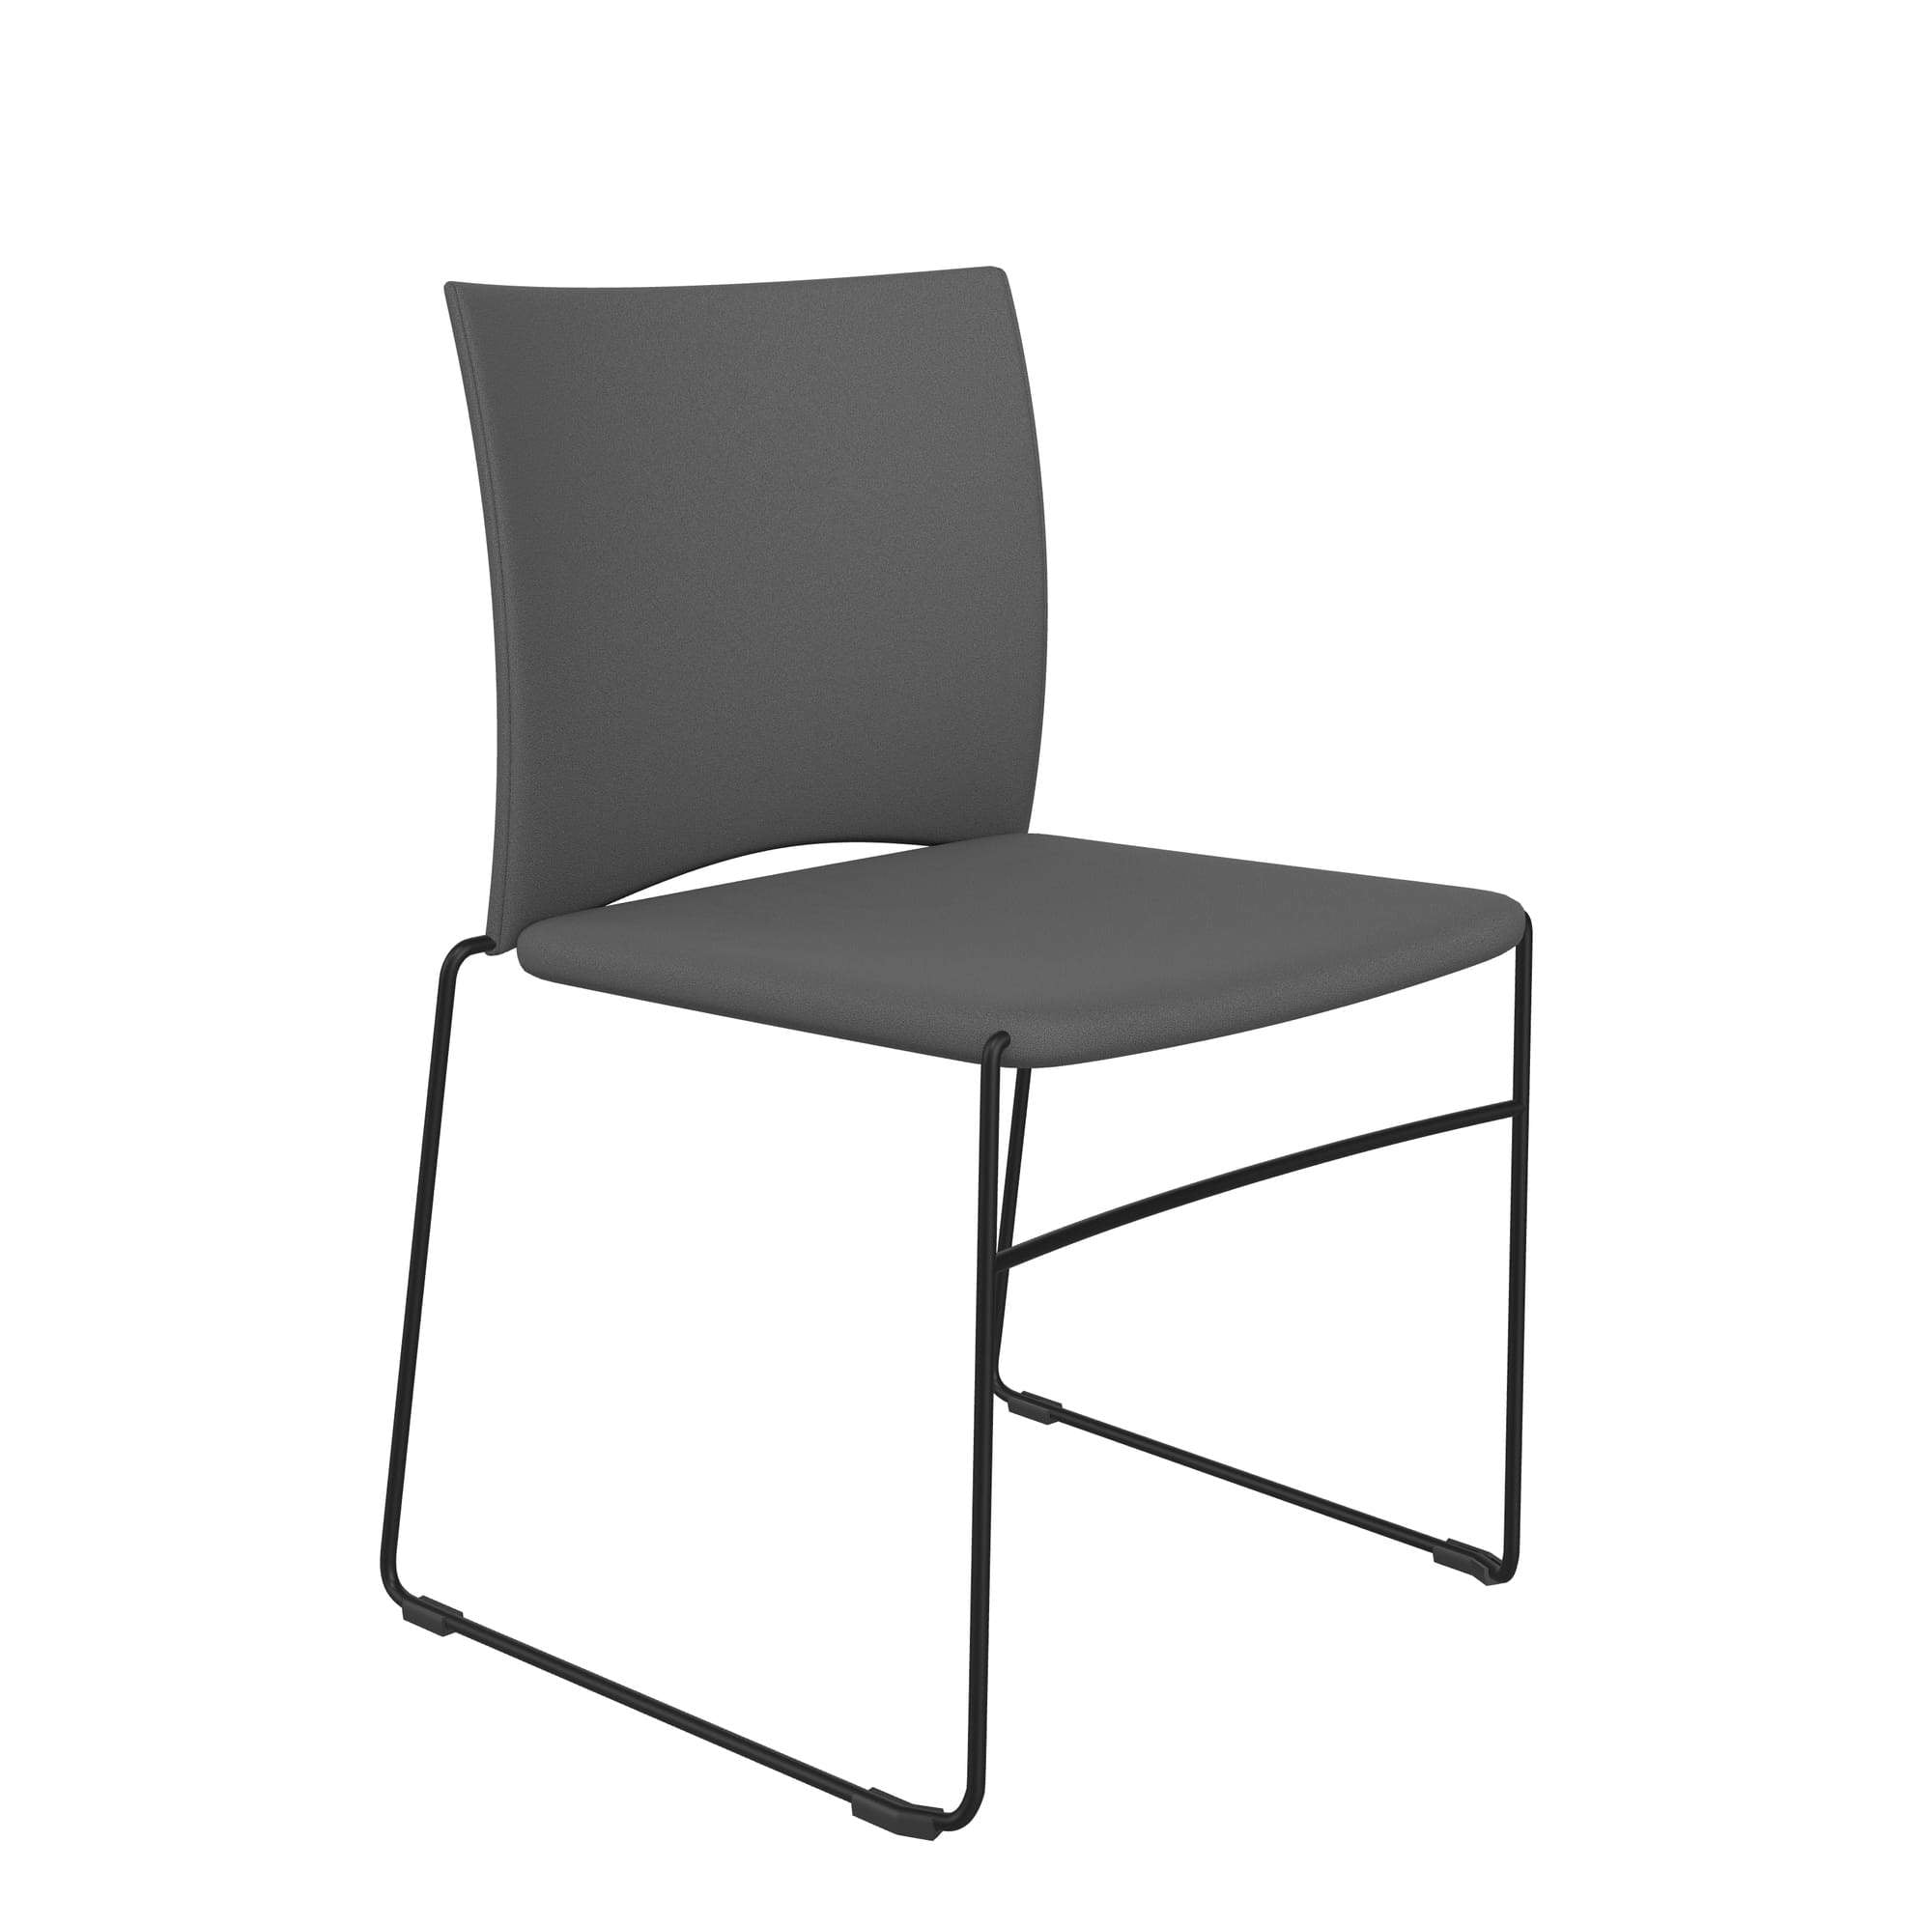 Ariz Upholstered Seat and Backrest Chair - Model 570V